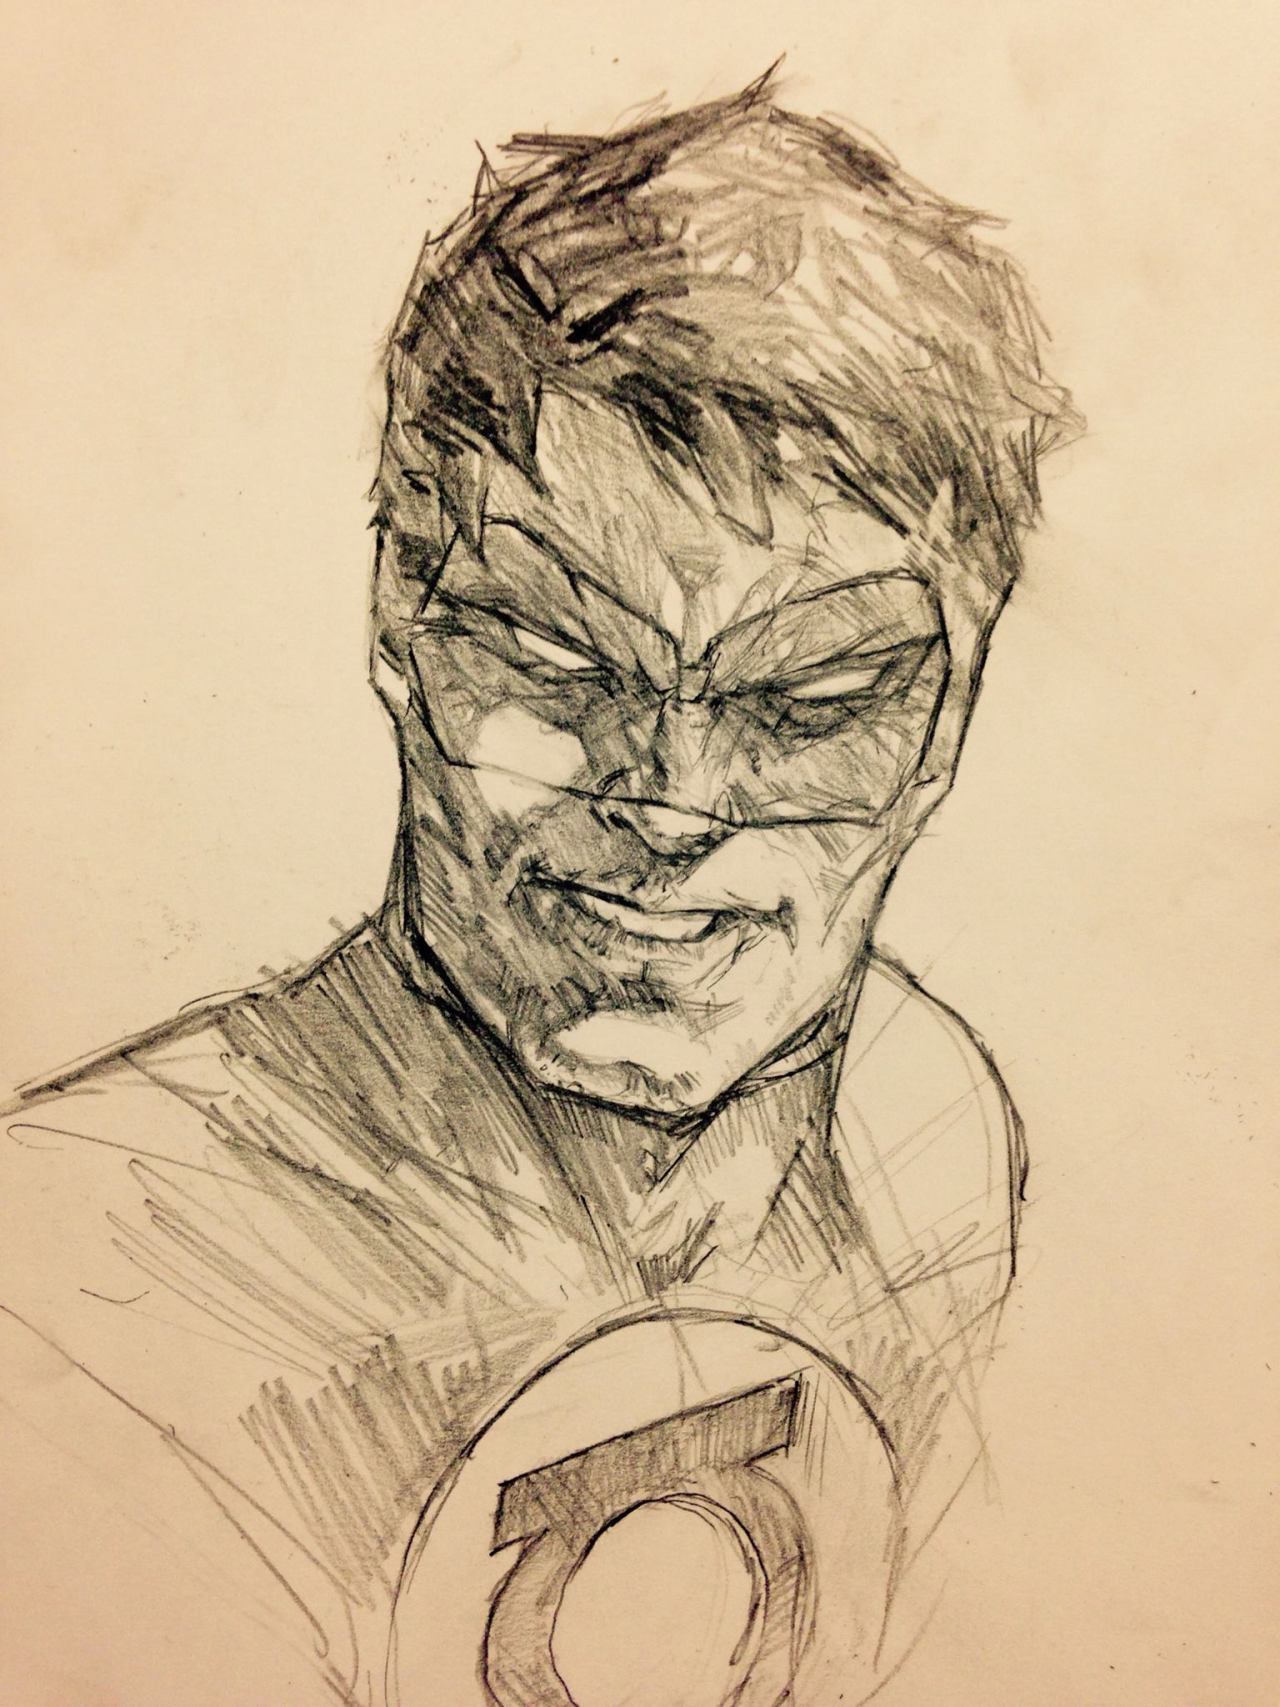 Green Lantern (Jim Lee) Fan Art Sketch | Art + Illustration + Design